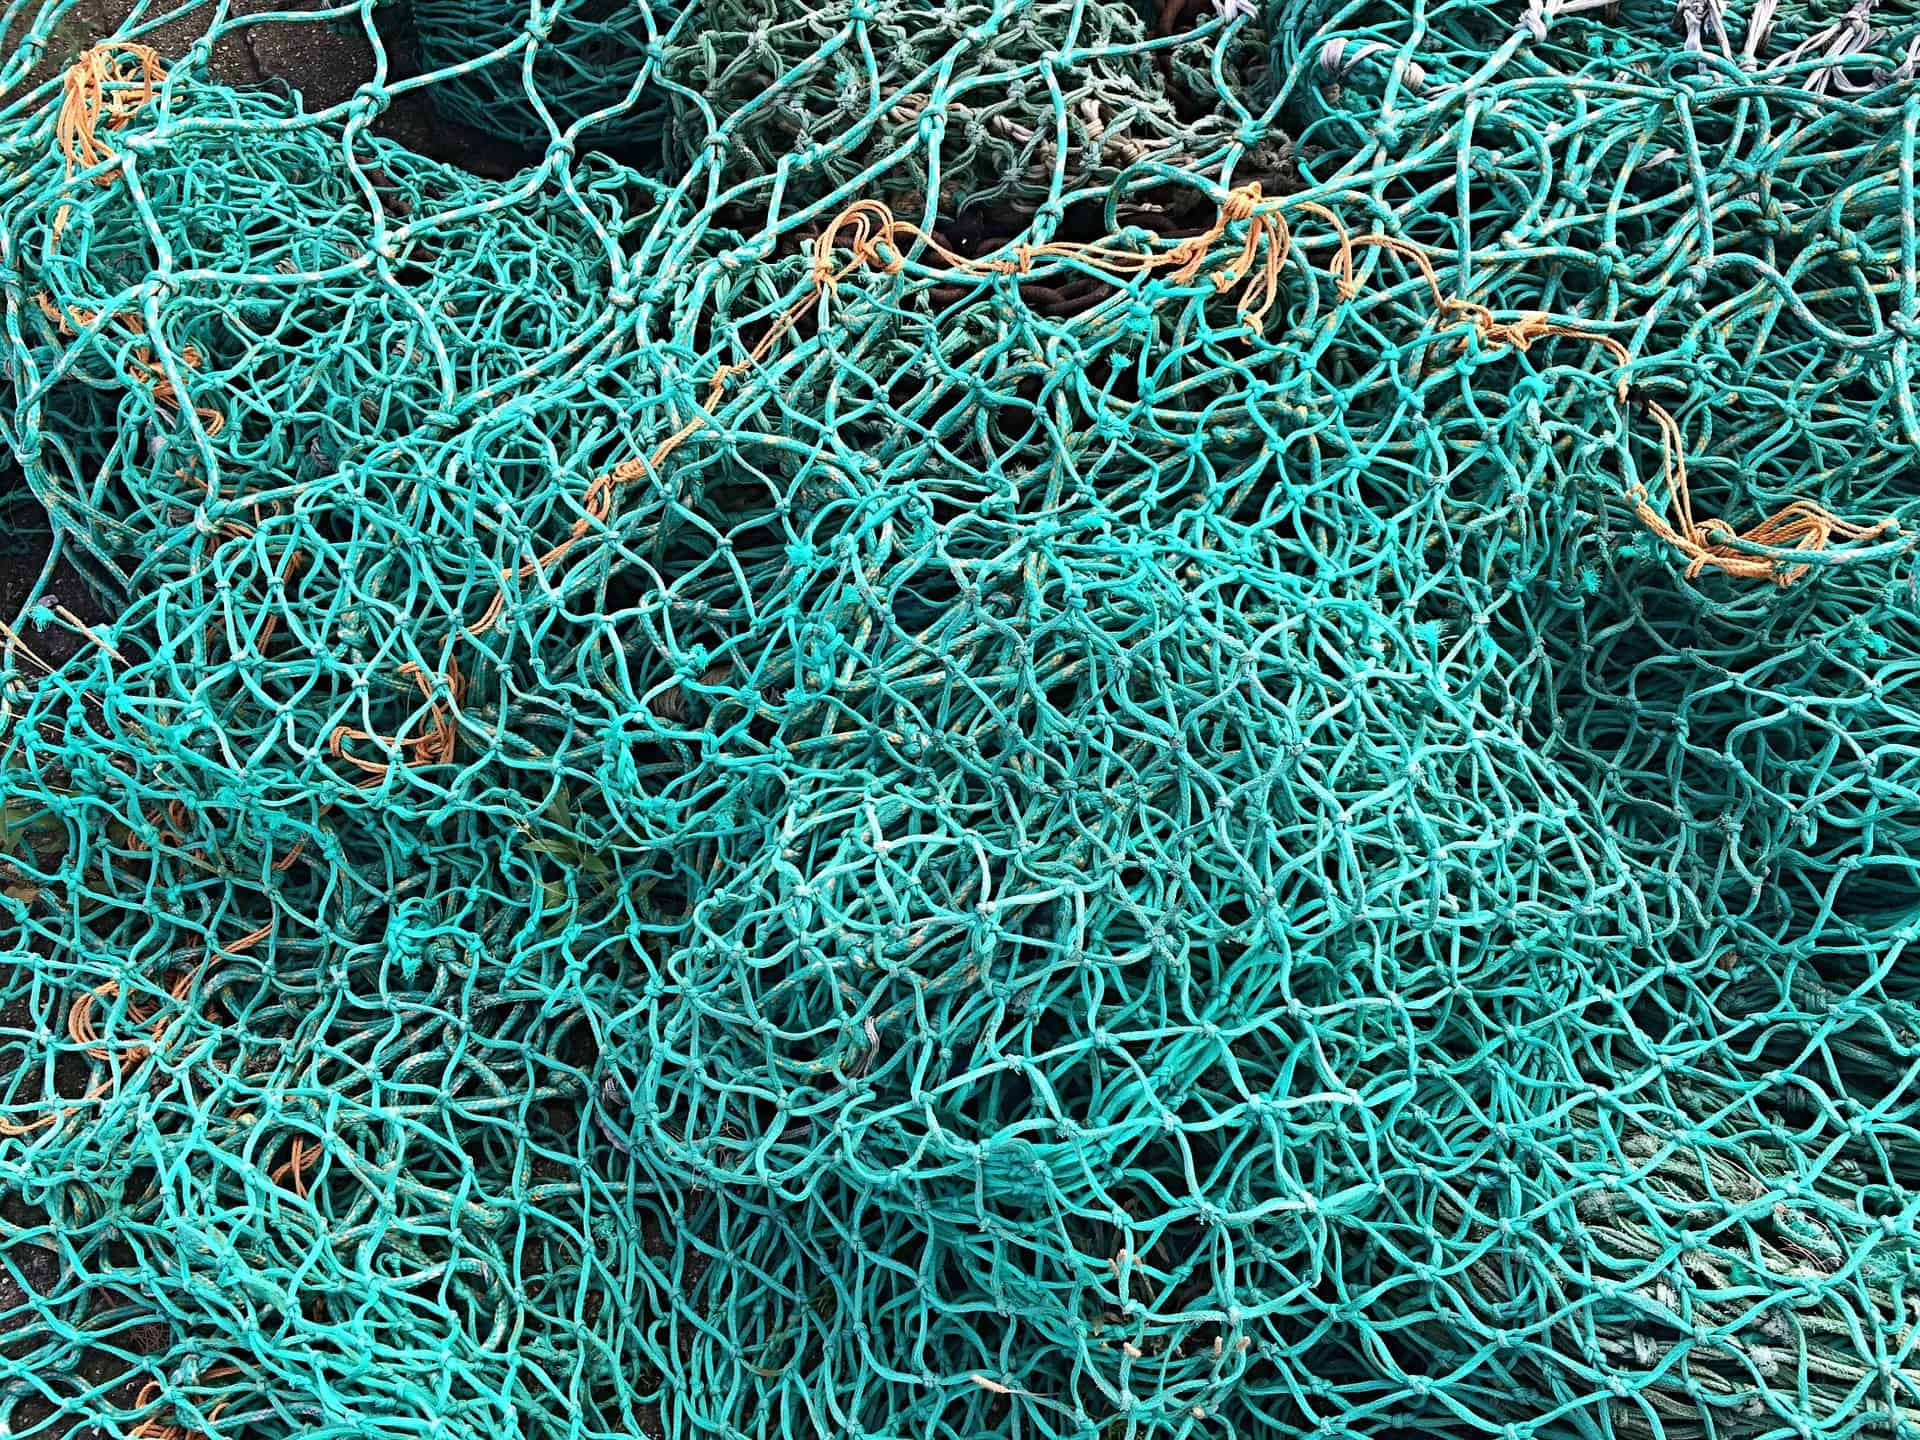 SINTEF partners with WNRI to find new ways to recycle marine plastics